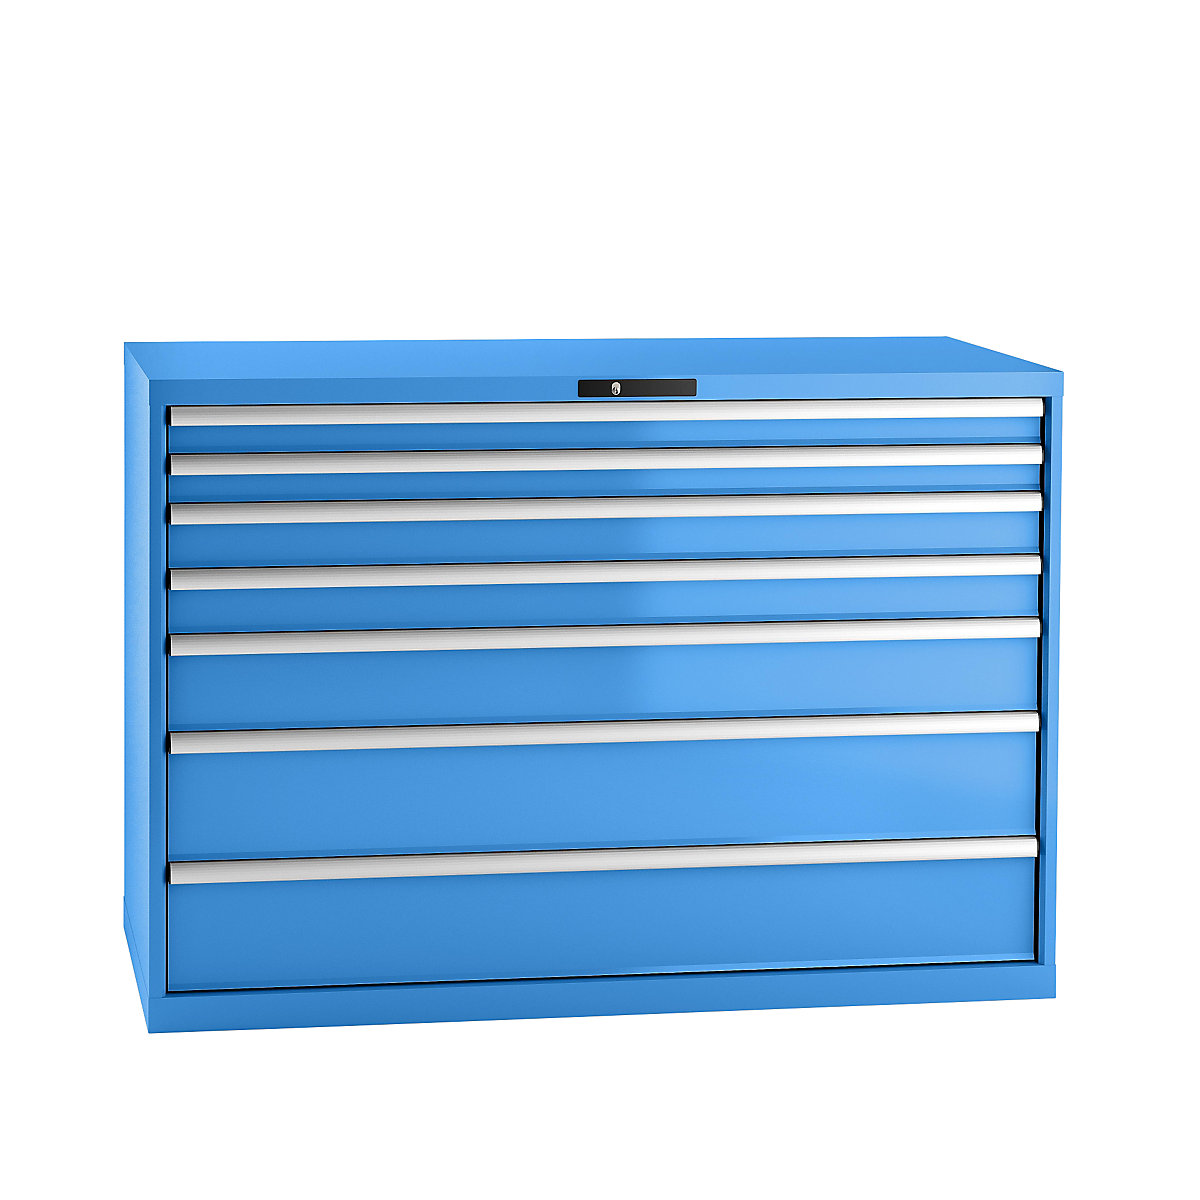 Predalnik, jeklena pločevina – LISTA, VxŠ 1000 x 1431 mm, 7 predalov, nosilnost 75 kg, svetlo modra-10